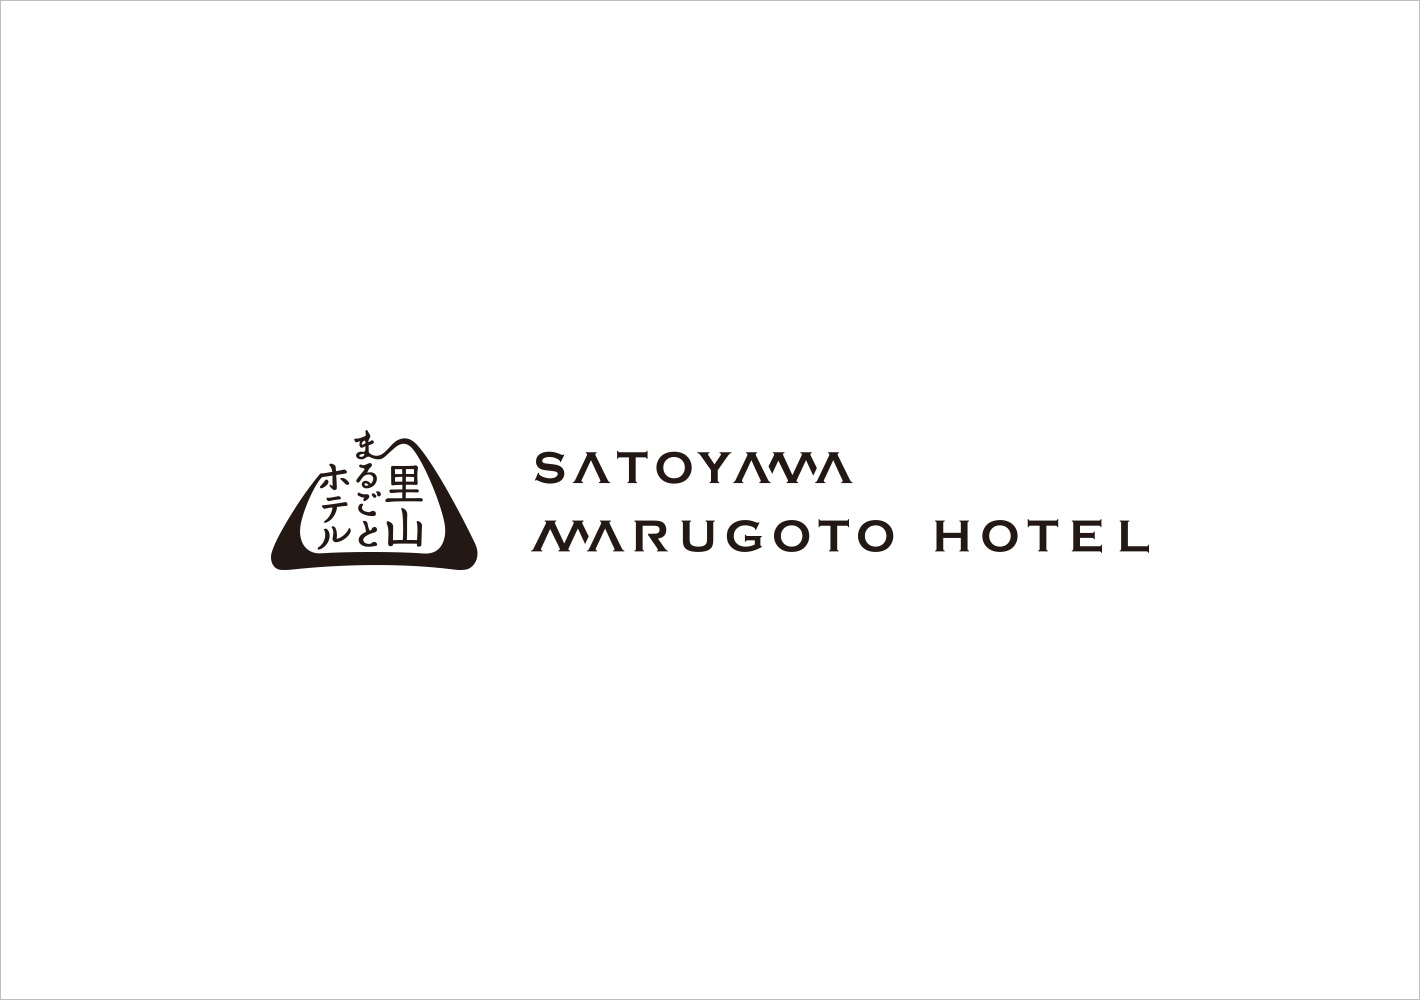 Satoyama Marugoto Hotel Inbound Website